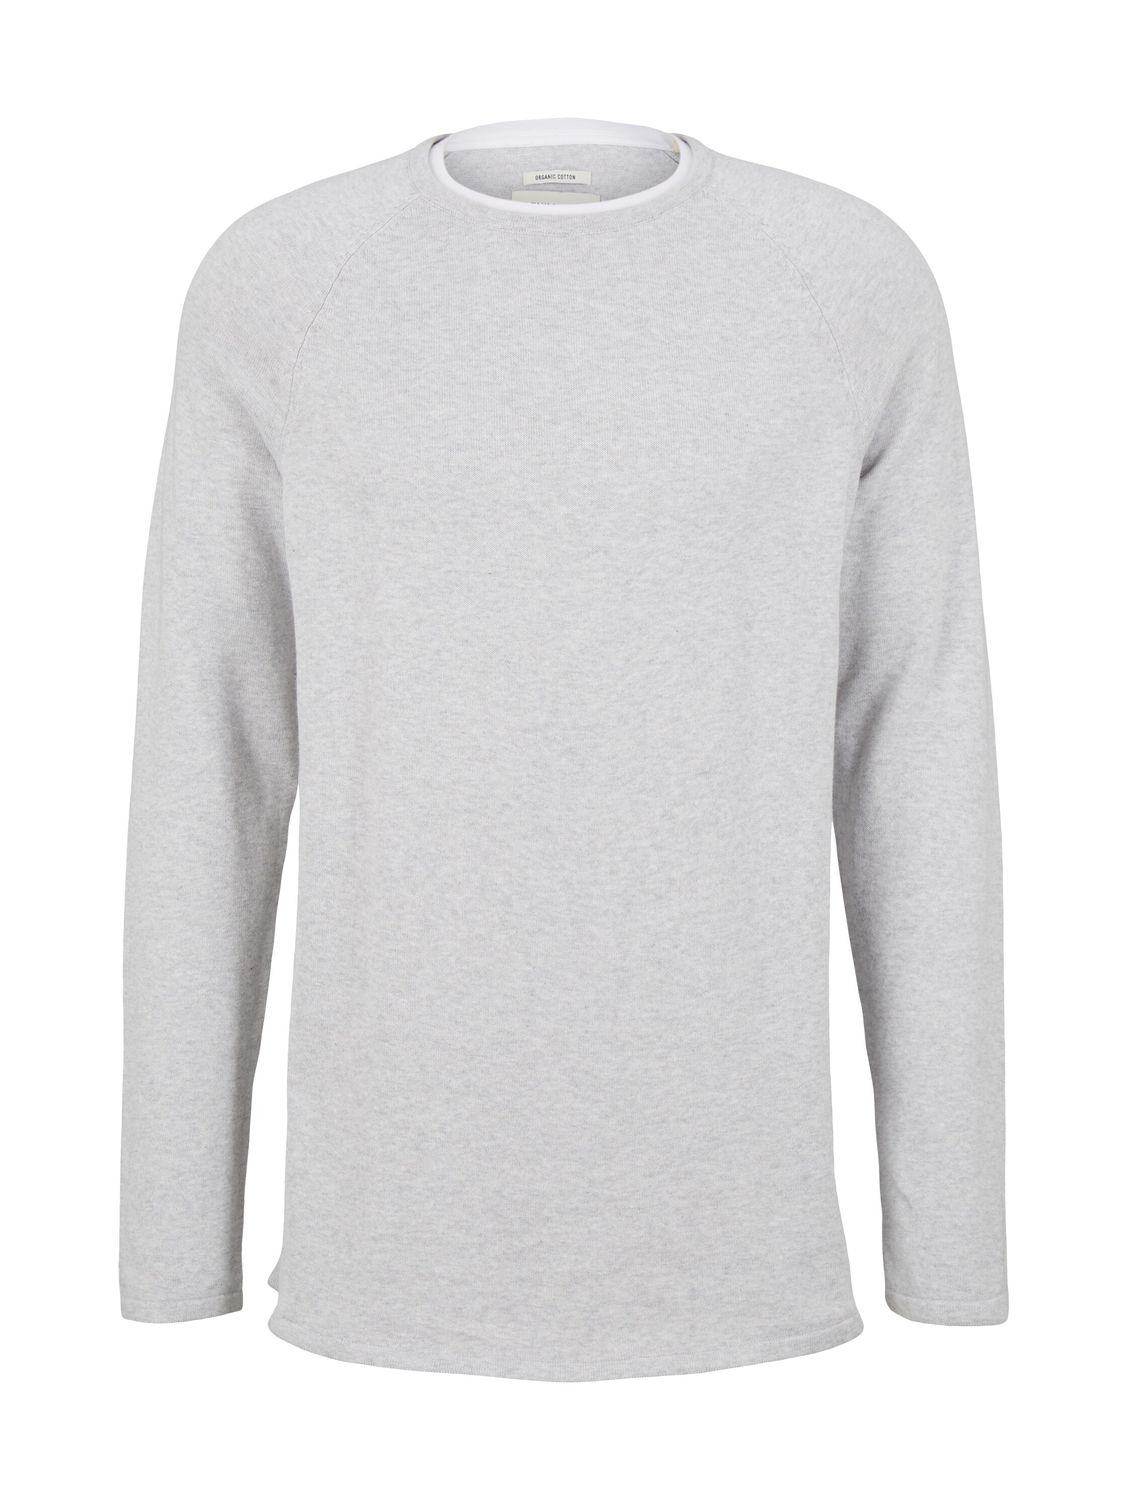 Пуловер TOM TAILOR Denim BASIC, серый толстовка tom tailor размер l серый